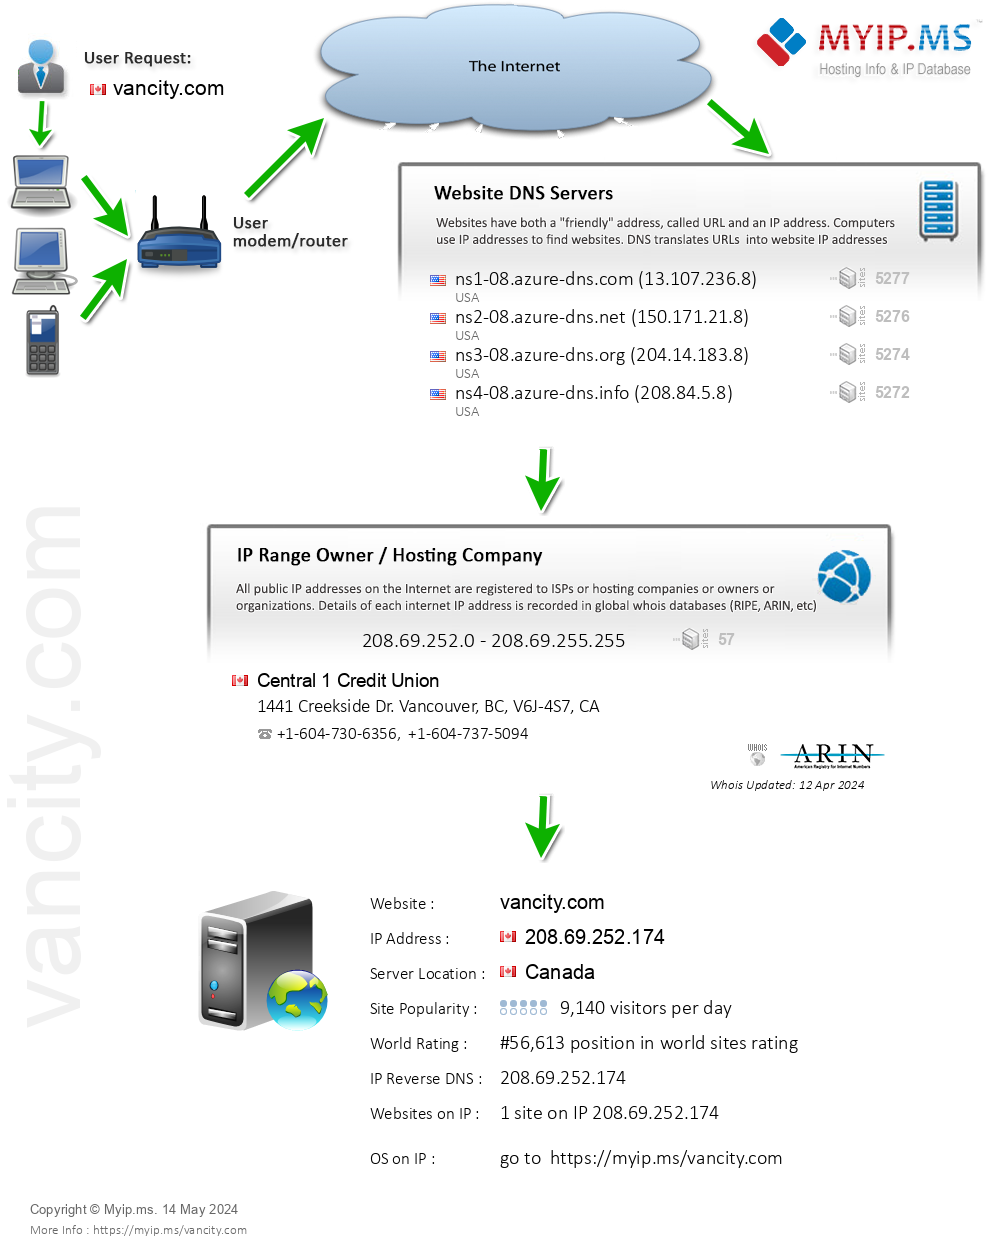 Vancity.com - Website Hosting Visual IP Diagram